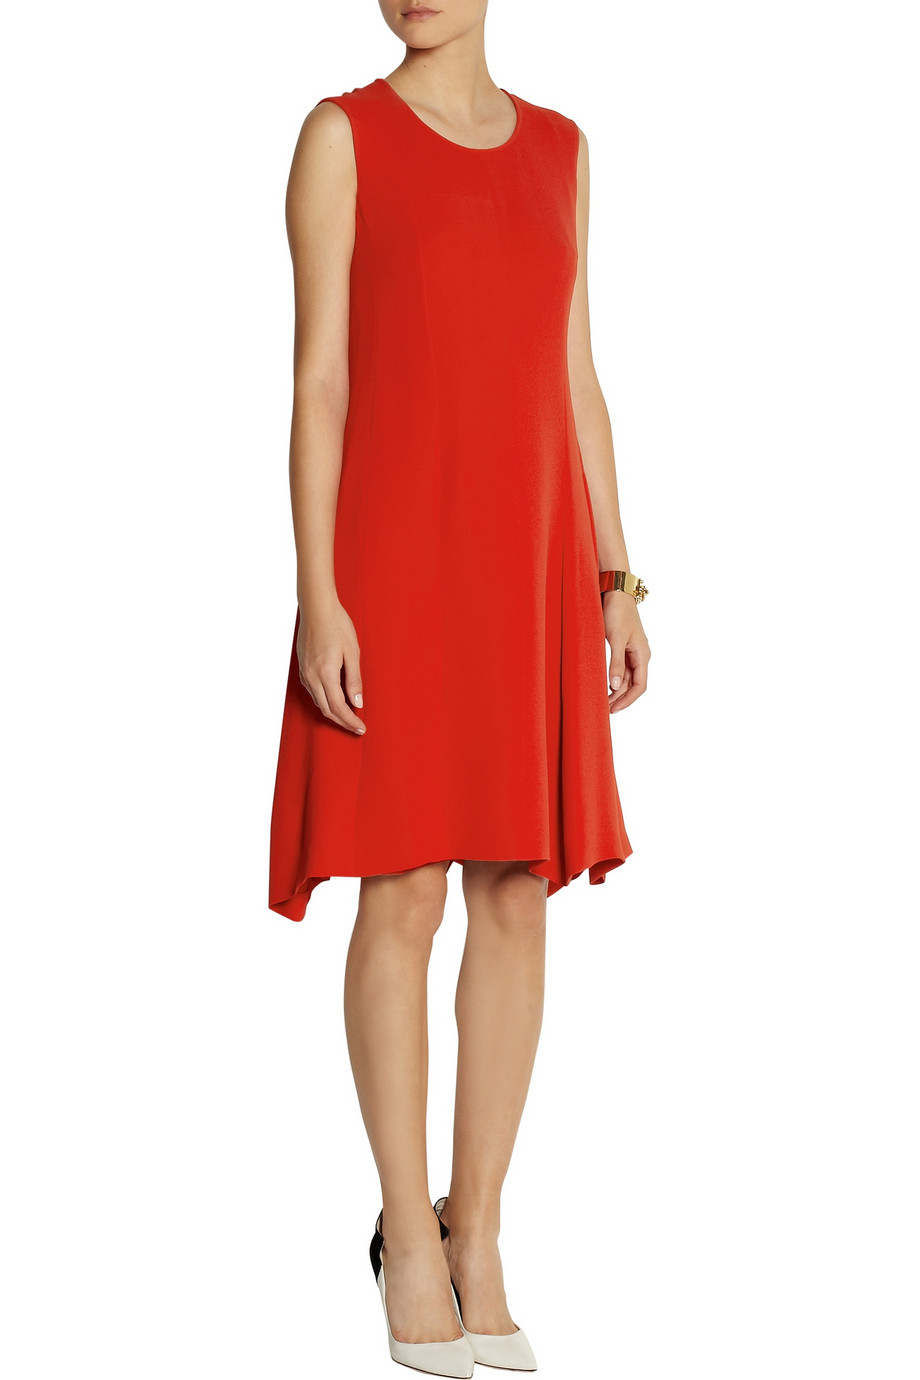 Jil Sander Pleated Silk-Crepe Dress in Red | Lyst